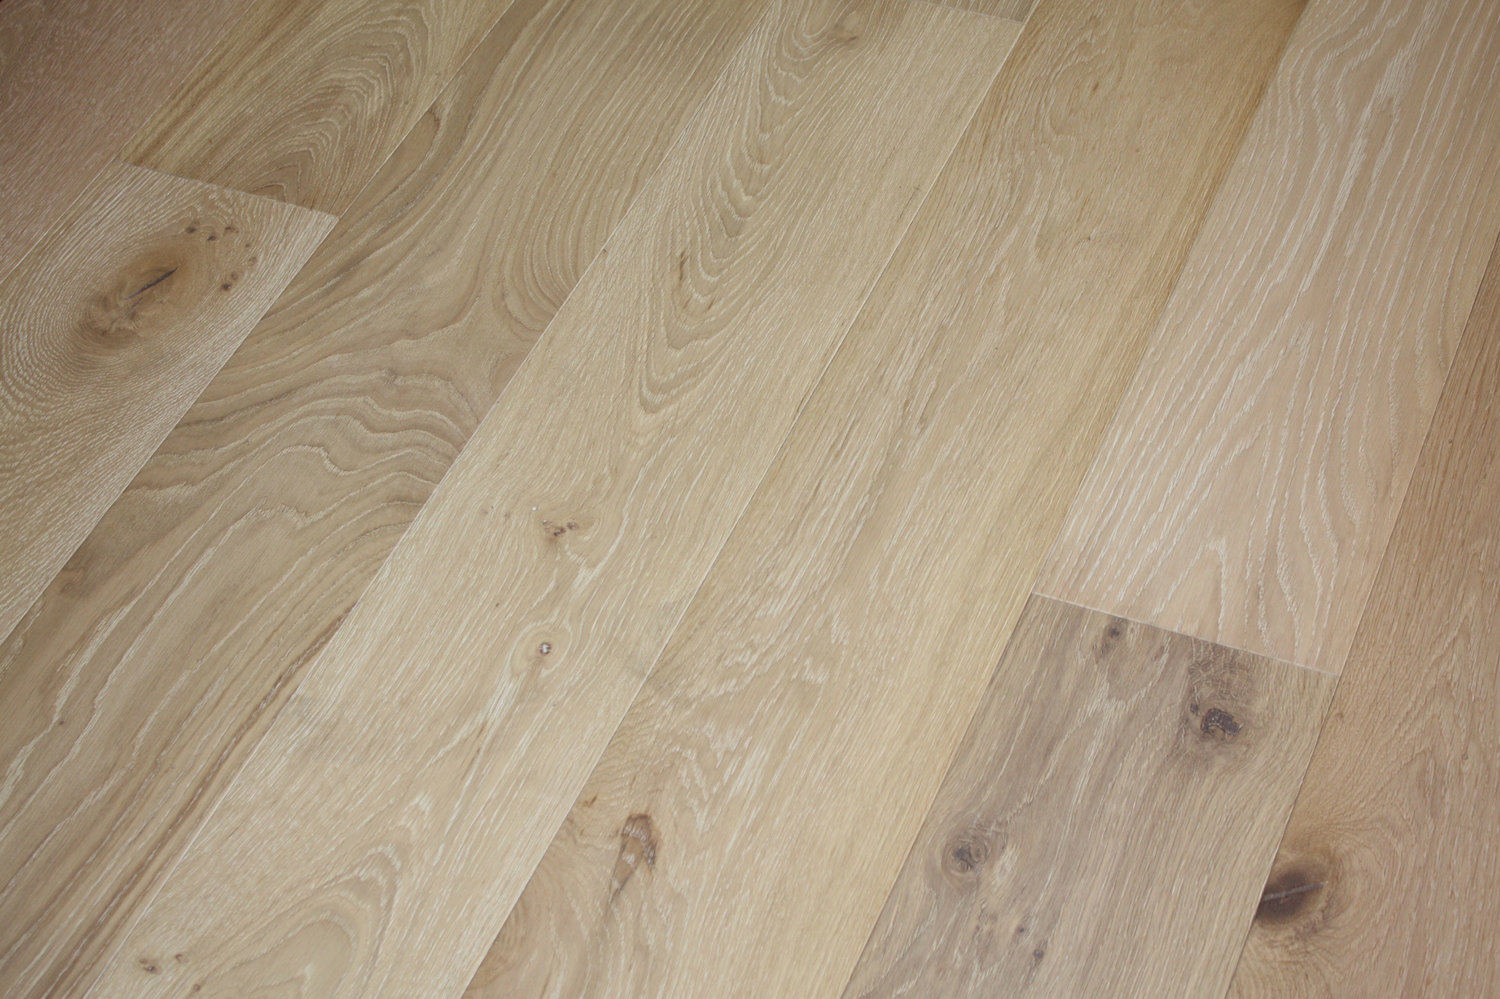 Teka Royal Kensington Boardwalk, Teka Engineered Hardwood Flooring